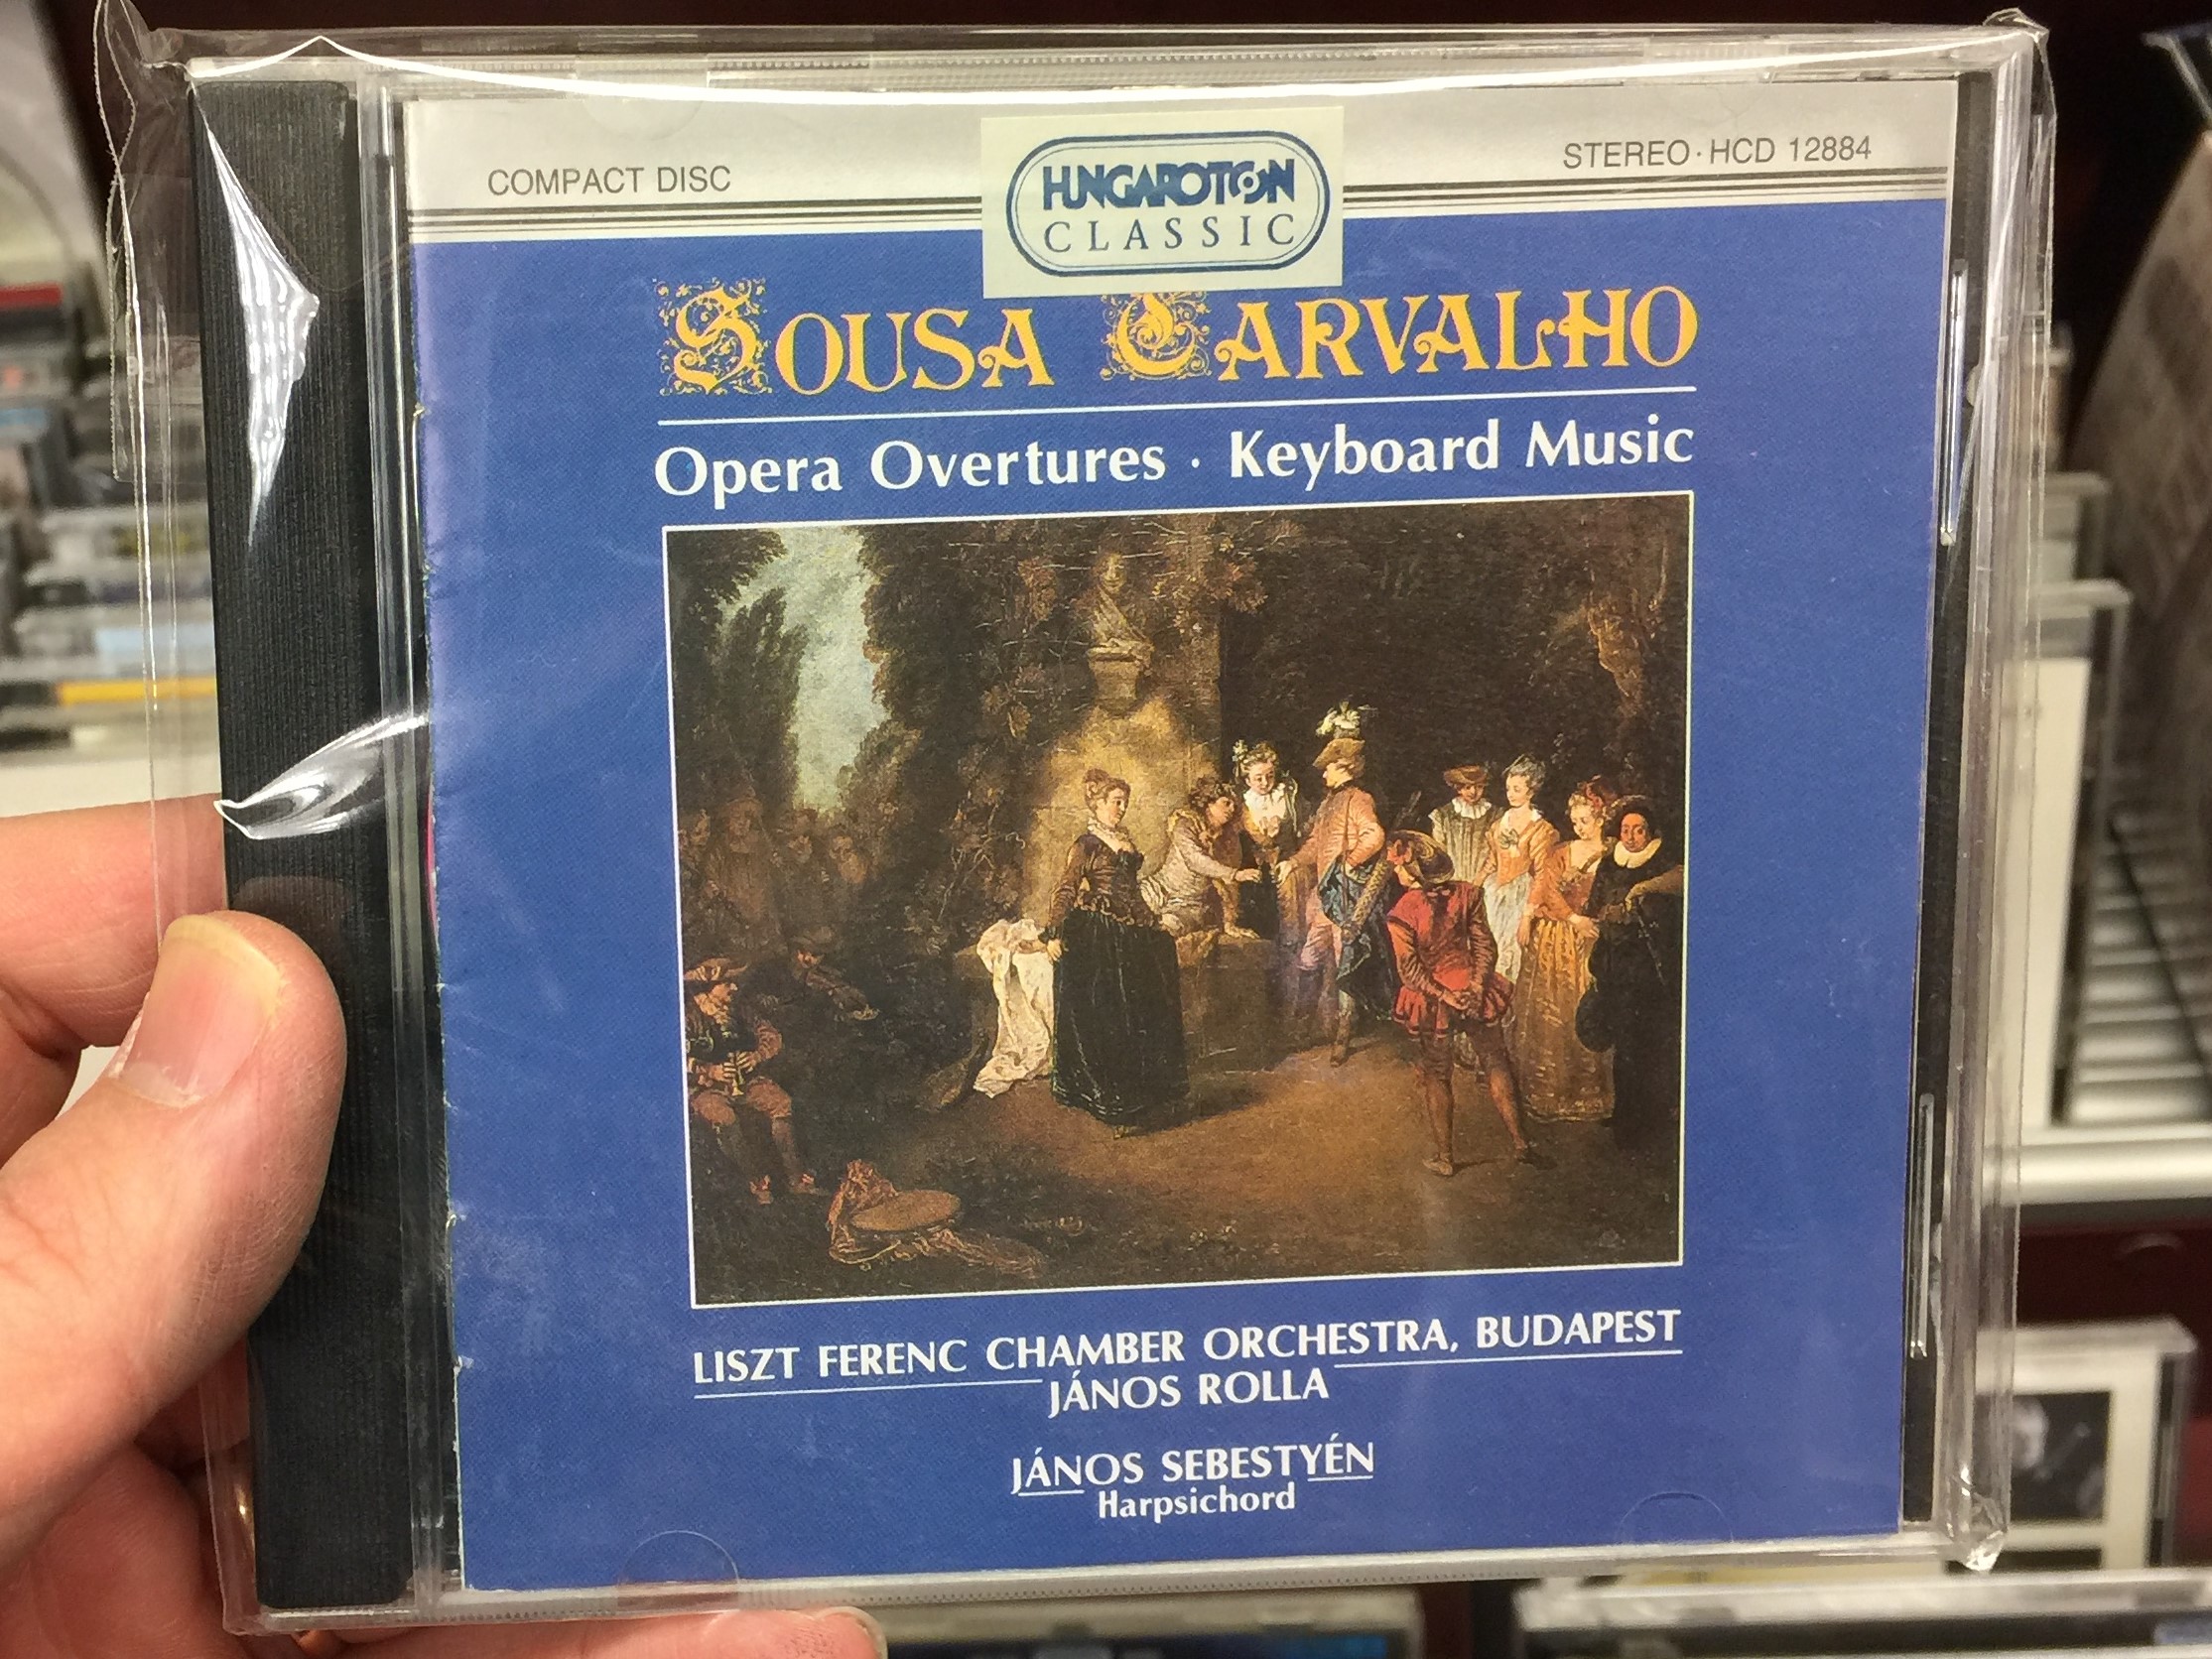 sousa-carvalho-opera-overtures-keyboard-music-liszt-ferenc-chamber-orchestra-budapest-j-nos-rolla-j-nos-sebesty-n-harpsichord-hungaroton-classic-audio-cd-1988-stereo-hcd-12884-1-.jpg